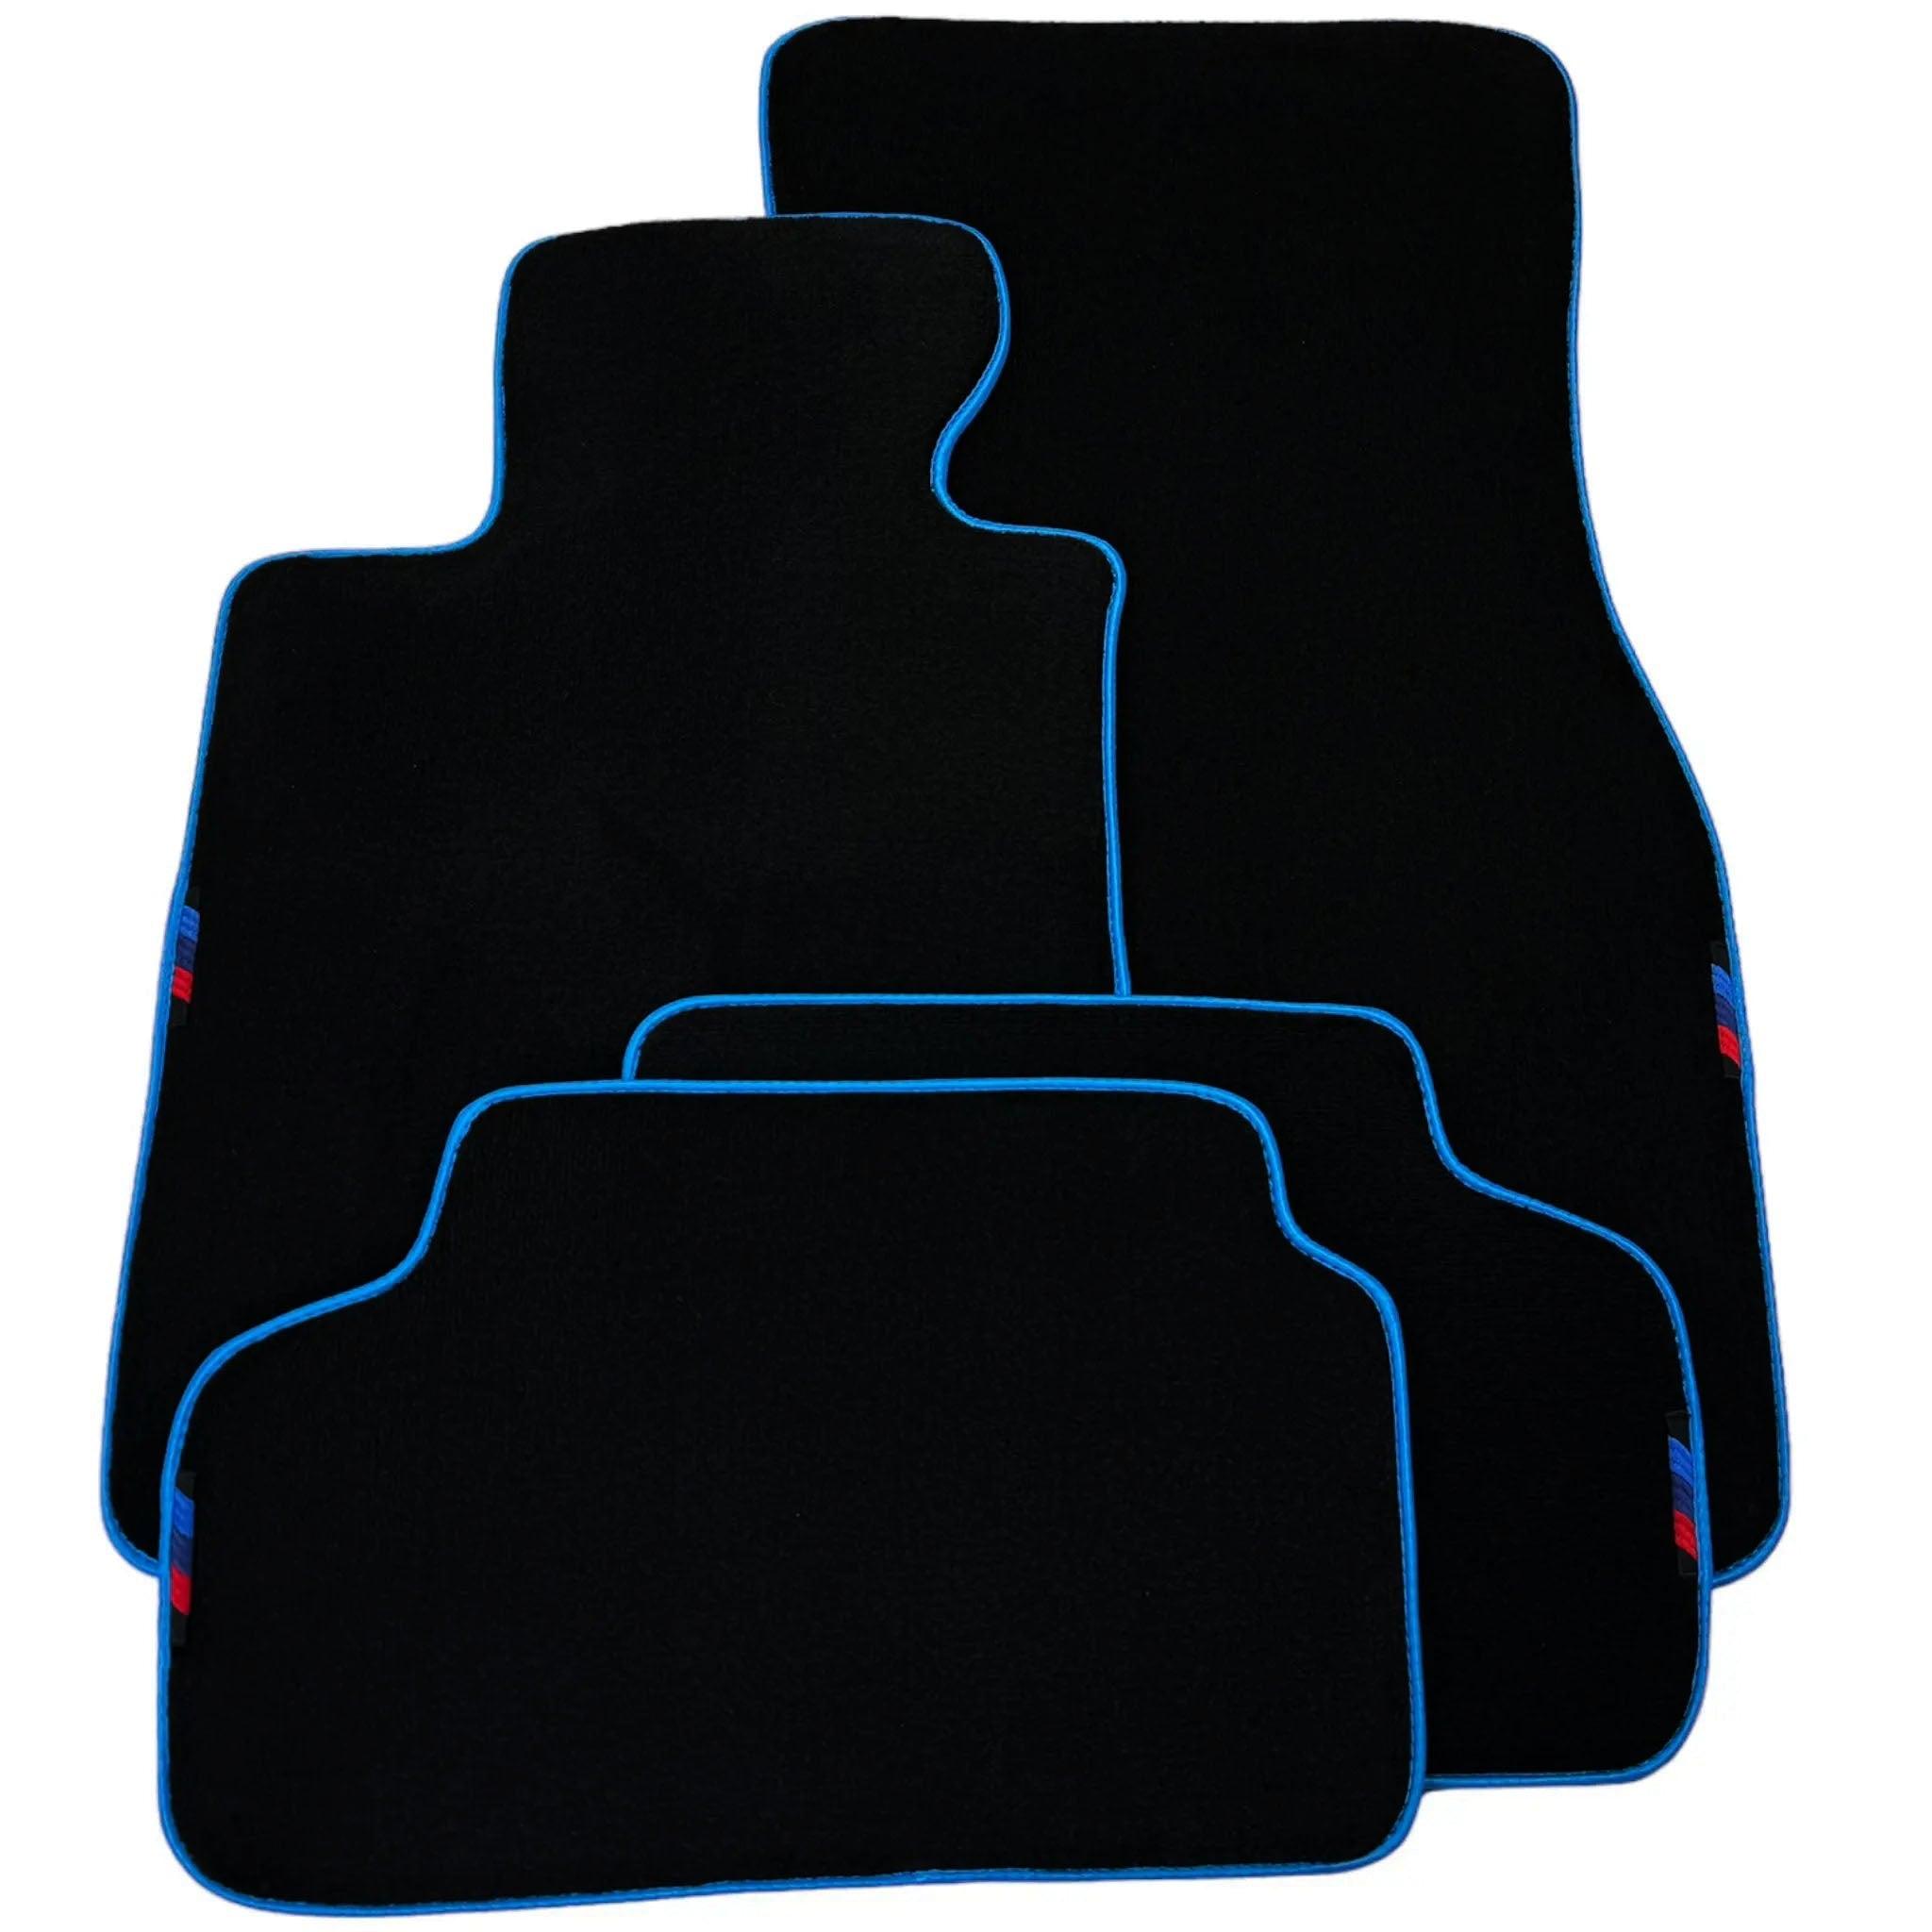 Black Floor Mats For BMW 3 Series E36 2-door Coupe | Sky Blue Trim